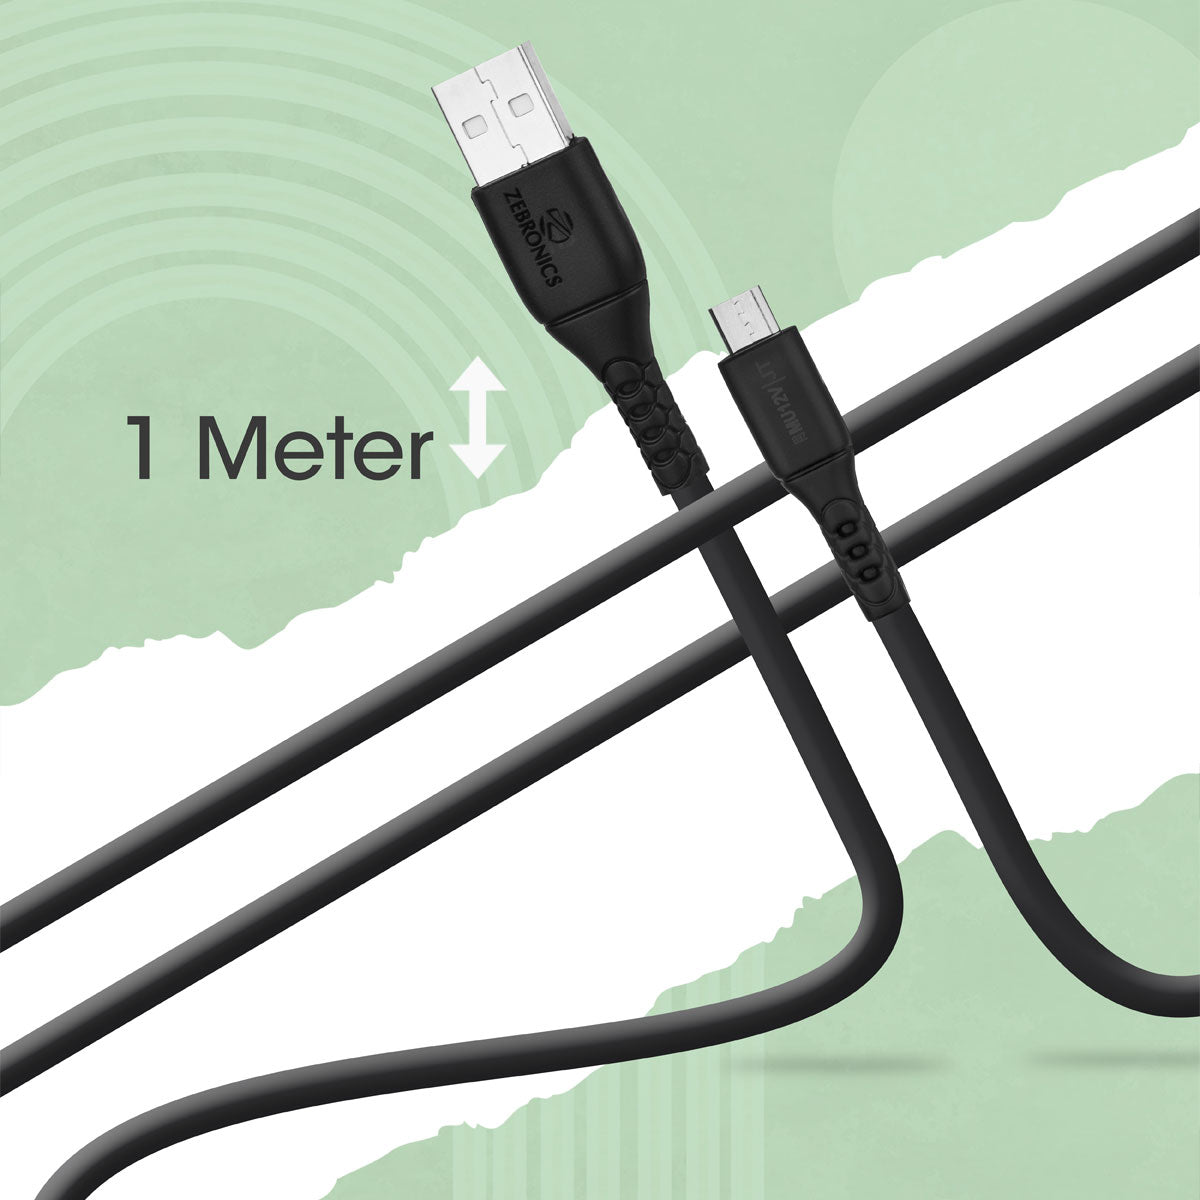 ZEB-MU12V - Micro USB Cable - Zebronics